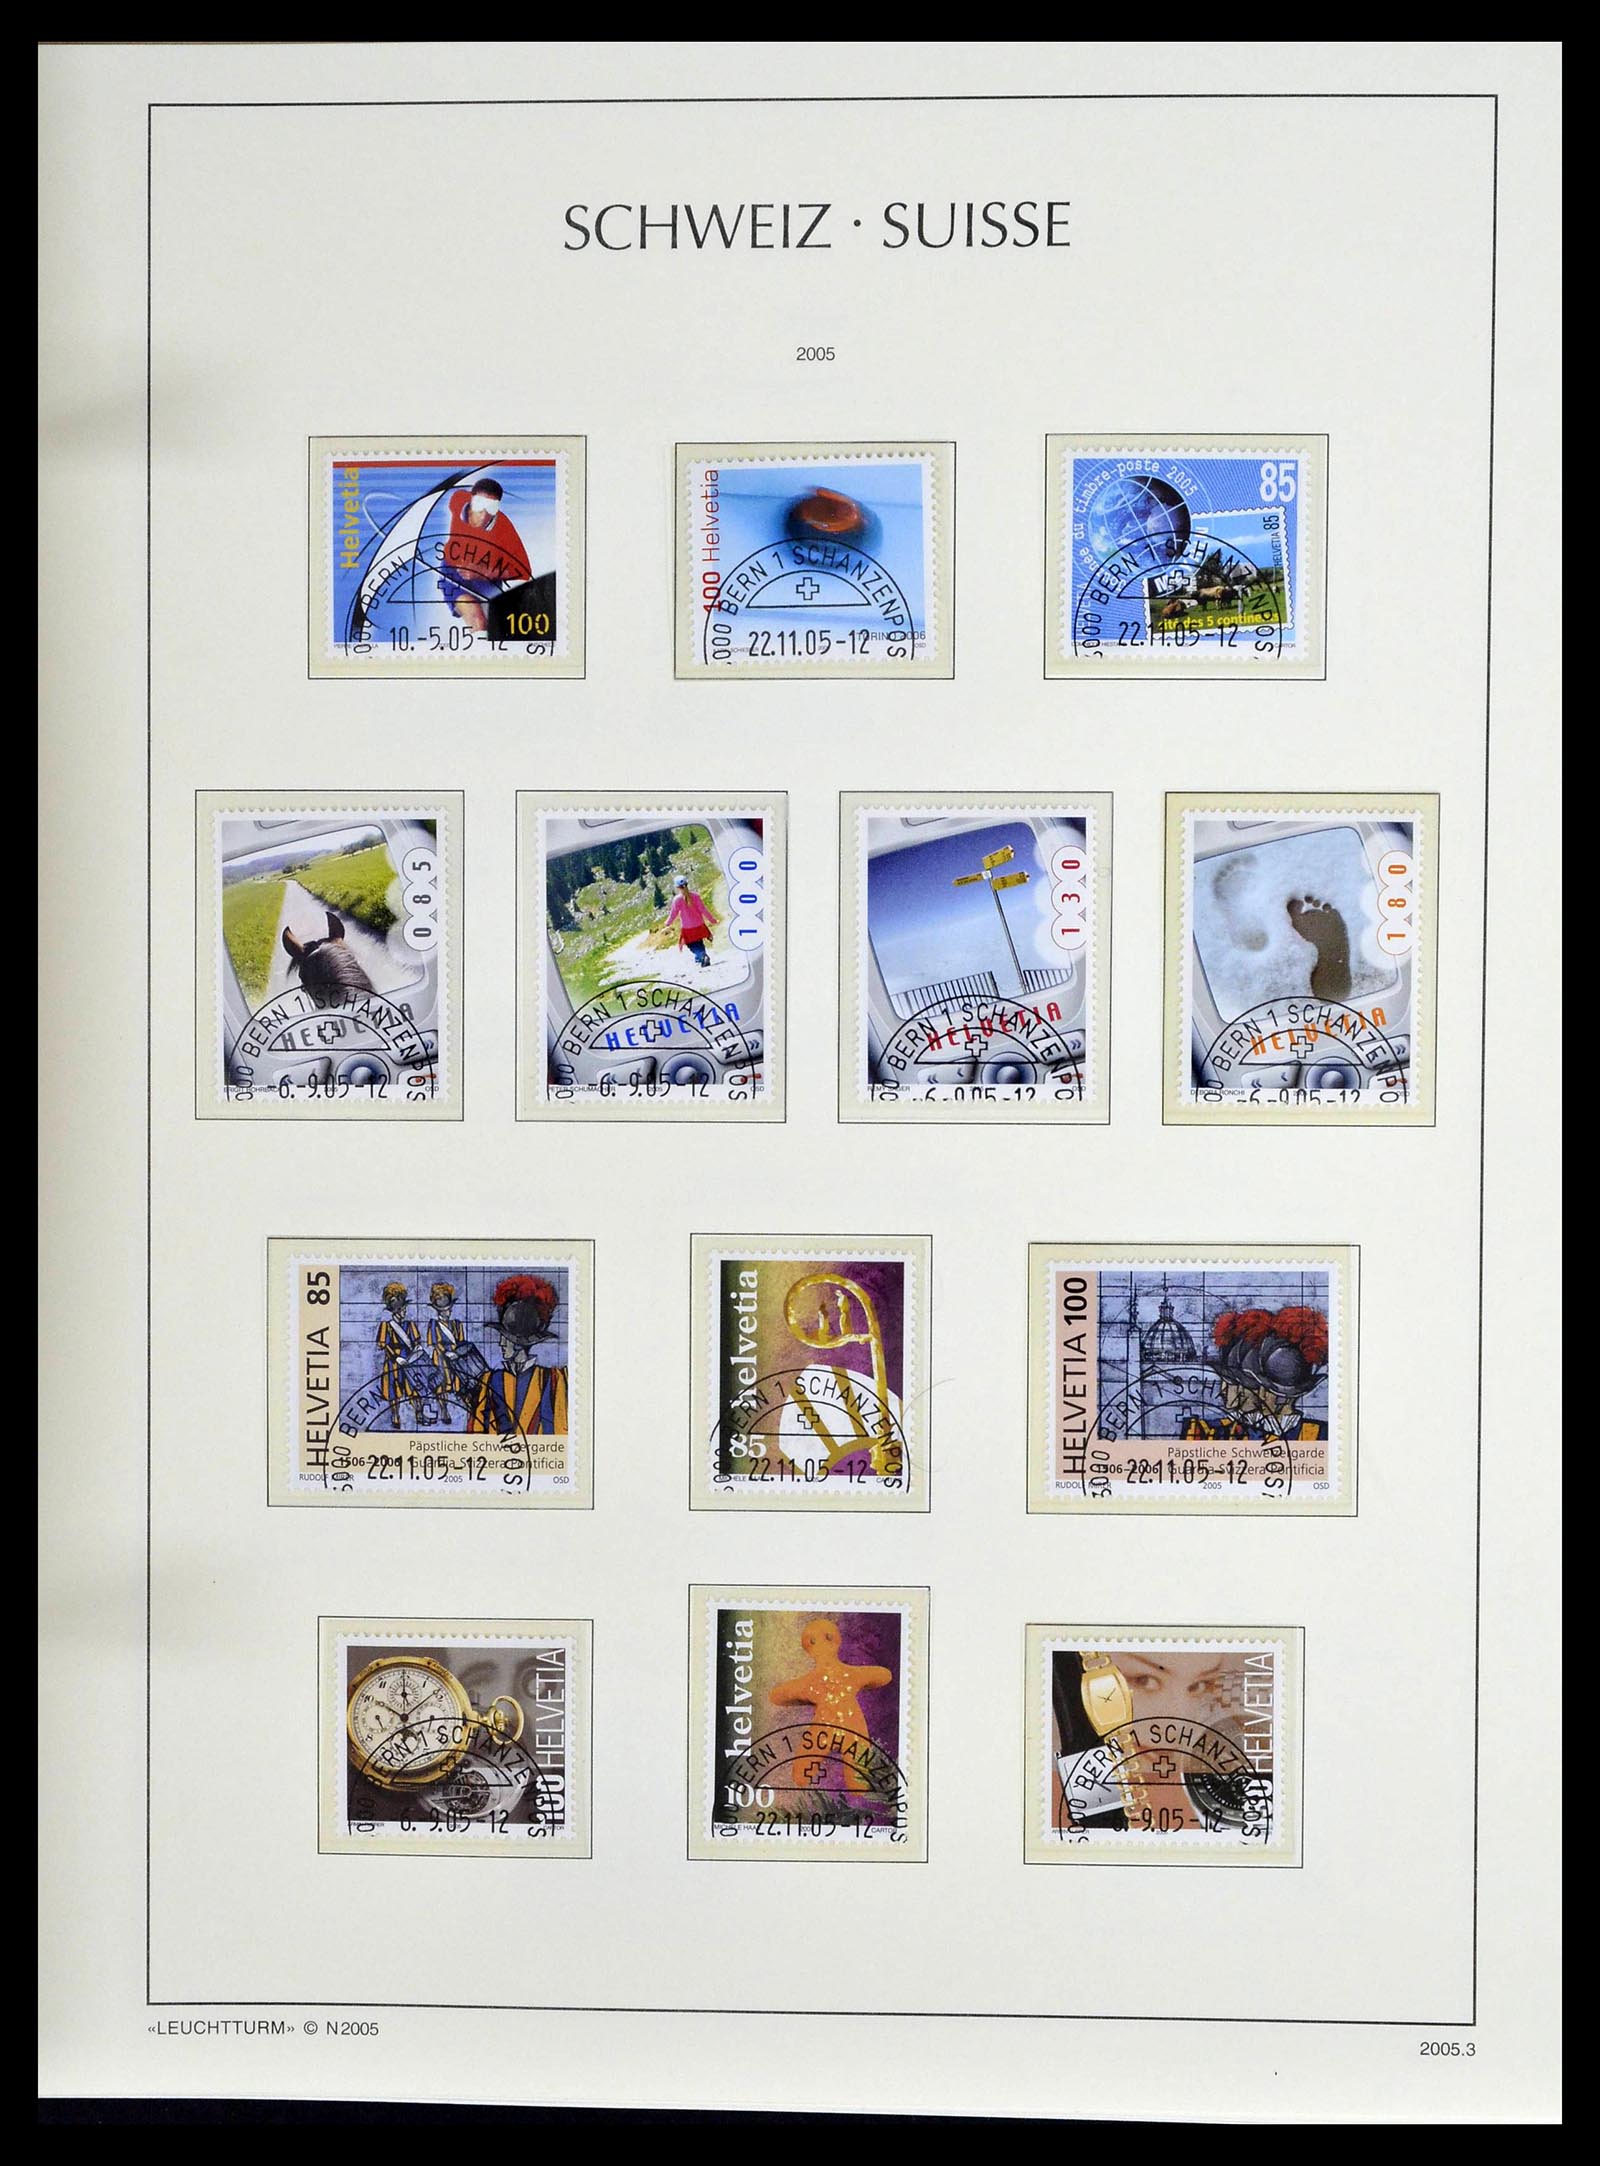 39094 0147 - Stamp collection 39094 Switzerland 1850-2005.